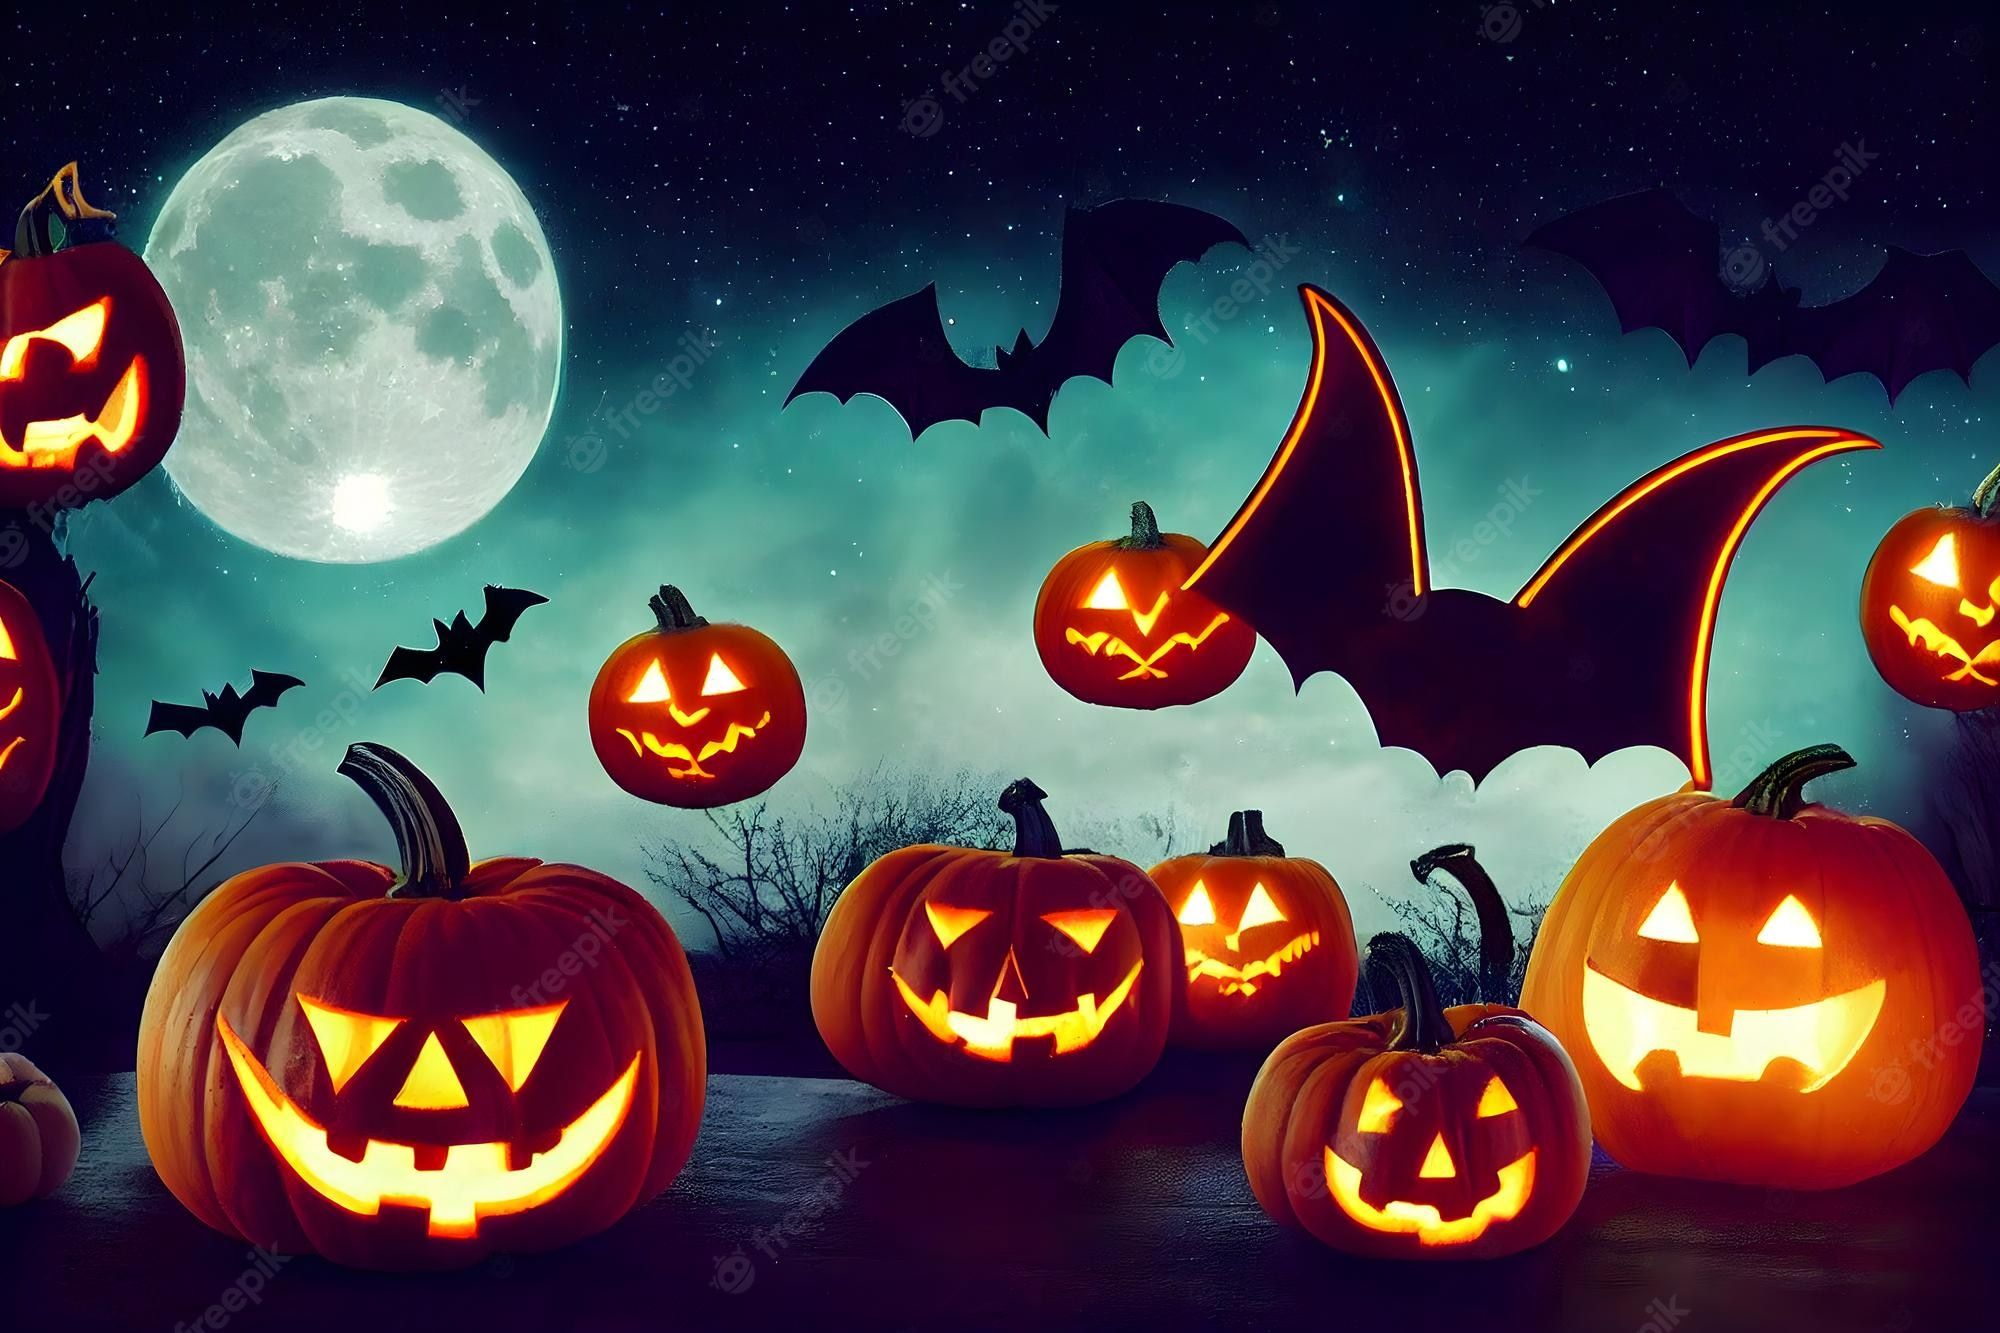 Premium Photo. Halloween aesthetic background bats pumpkins full moon and stars night neural network generated art